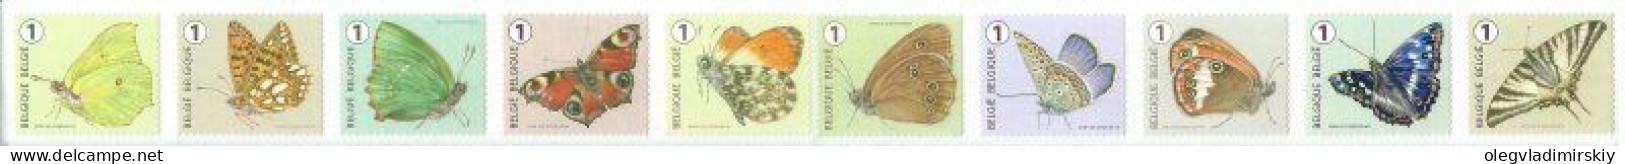 Belgium Belgique Belgien 2014 Butterflies Definitives Set Of 10 Stamps MNH - Papillons